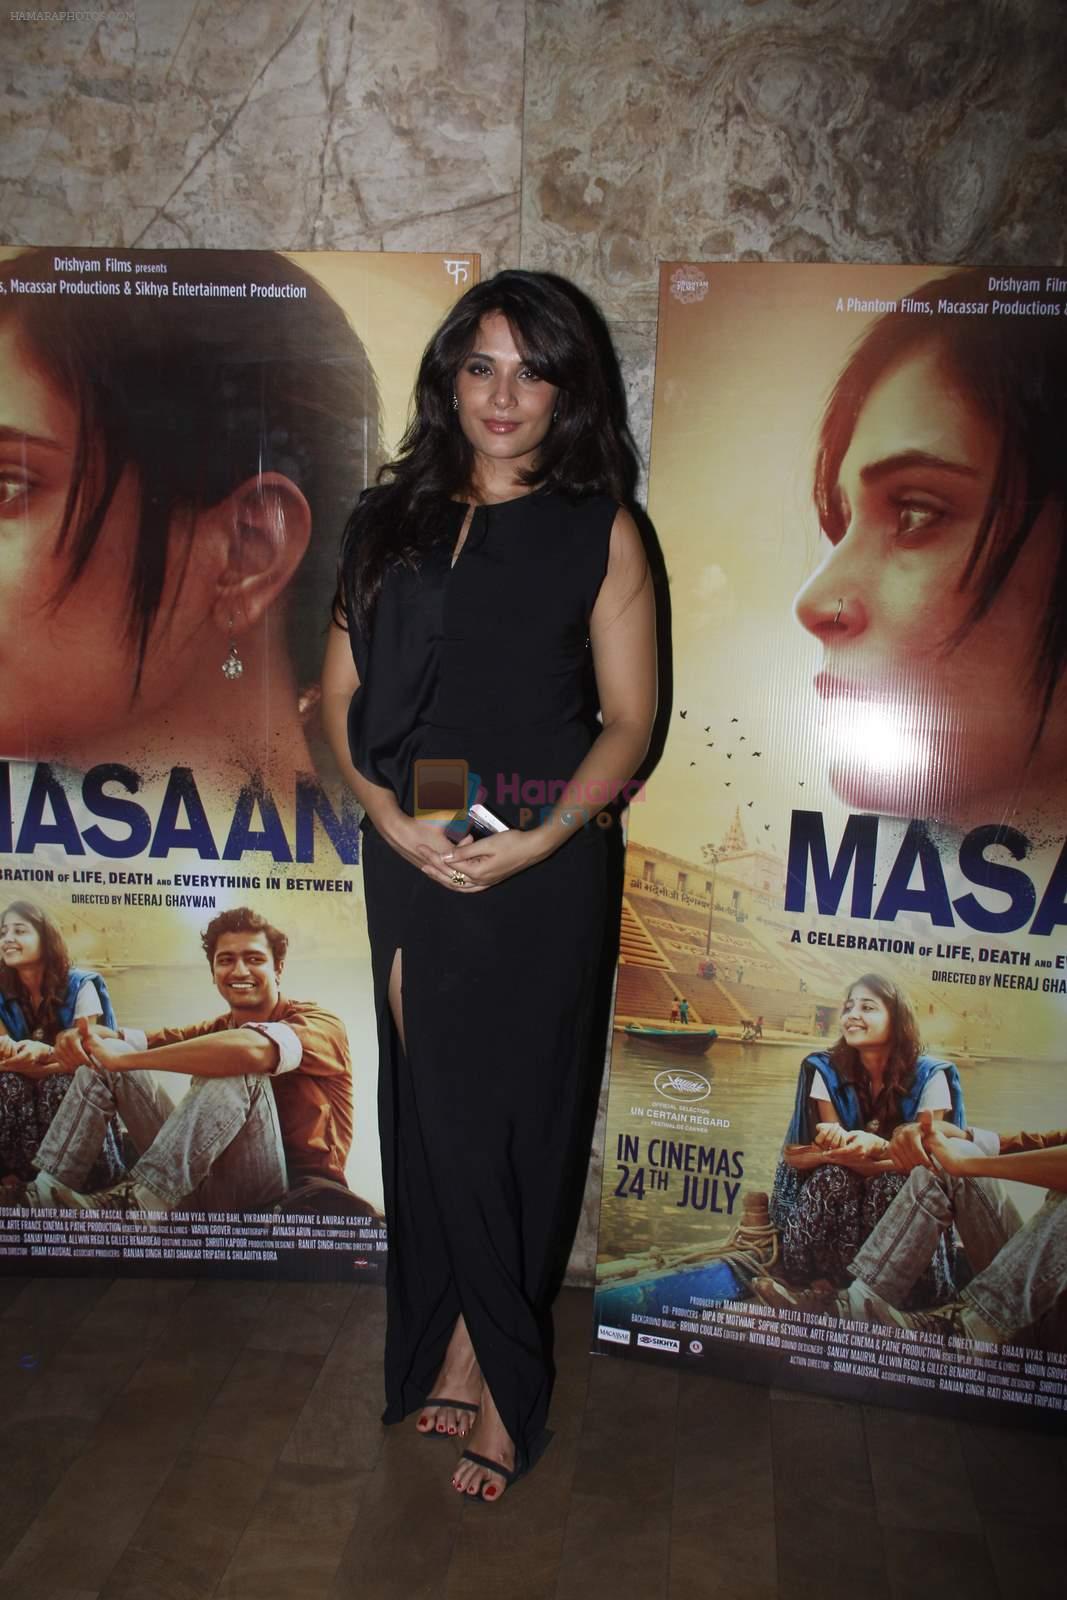 Richa Chadda at Masaan screening in Lightbox, Mumbai on 21st July 2015